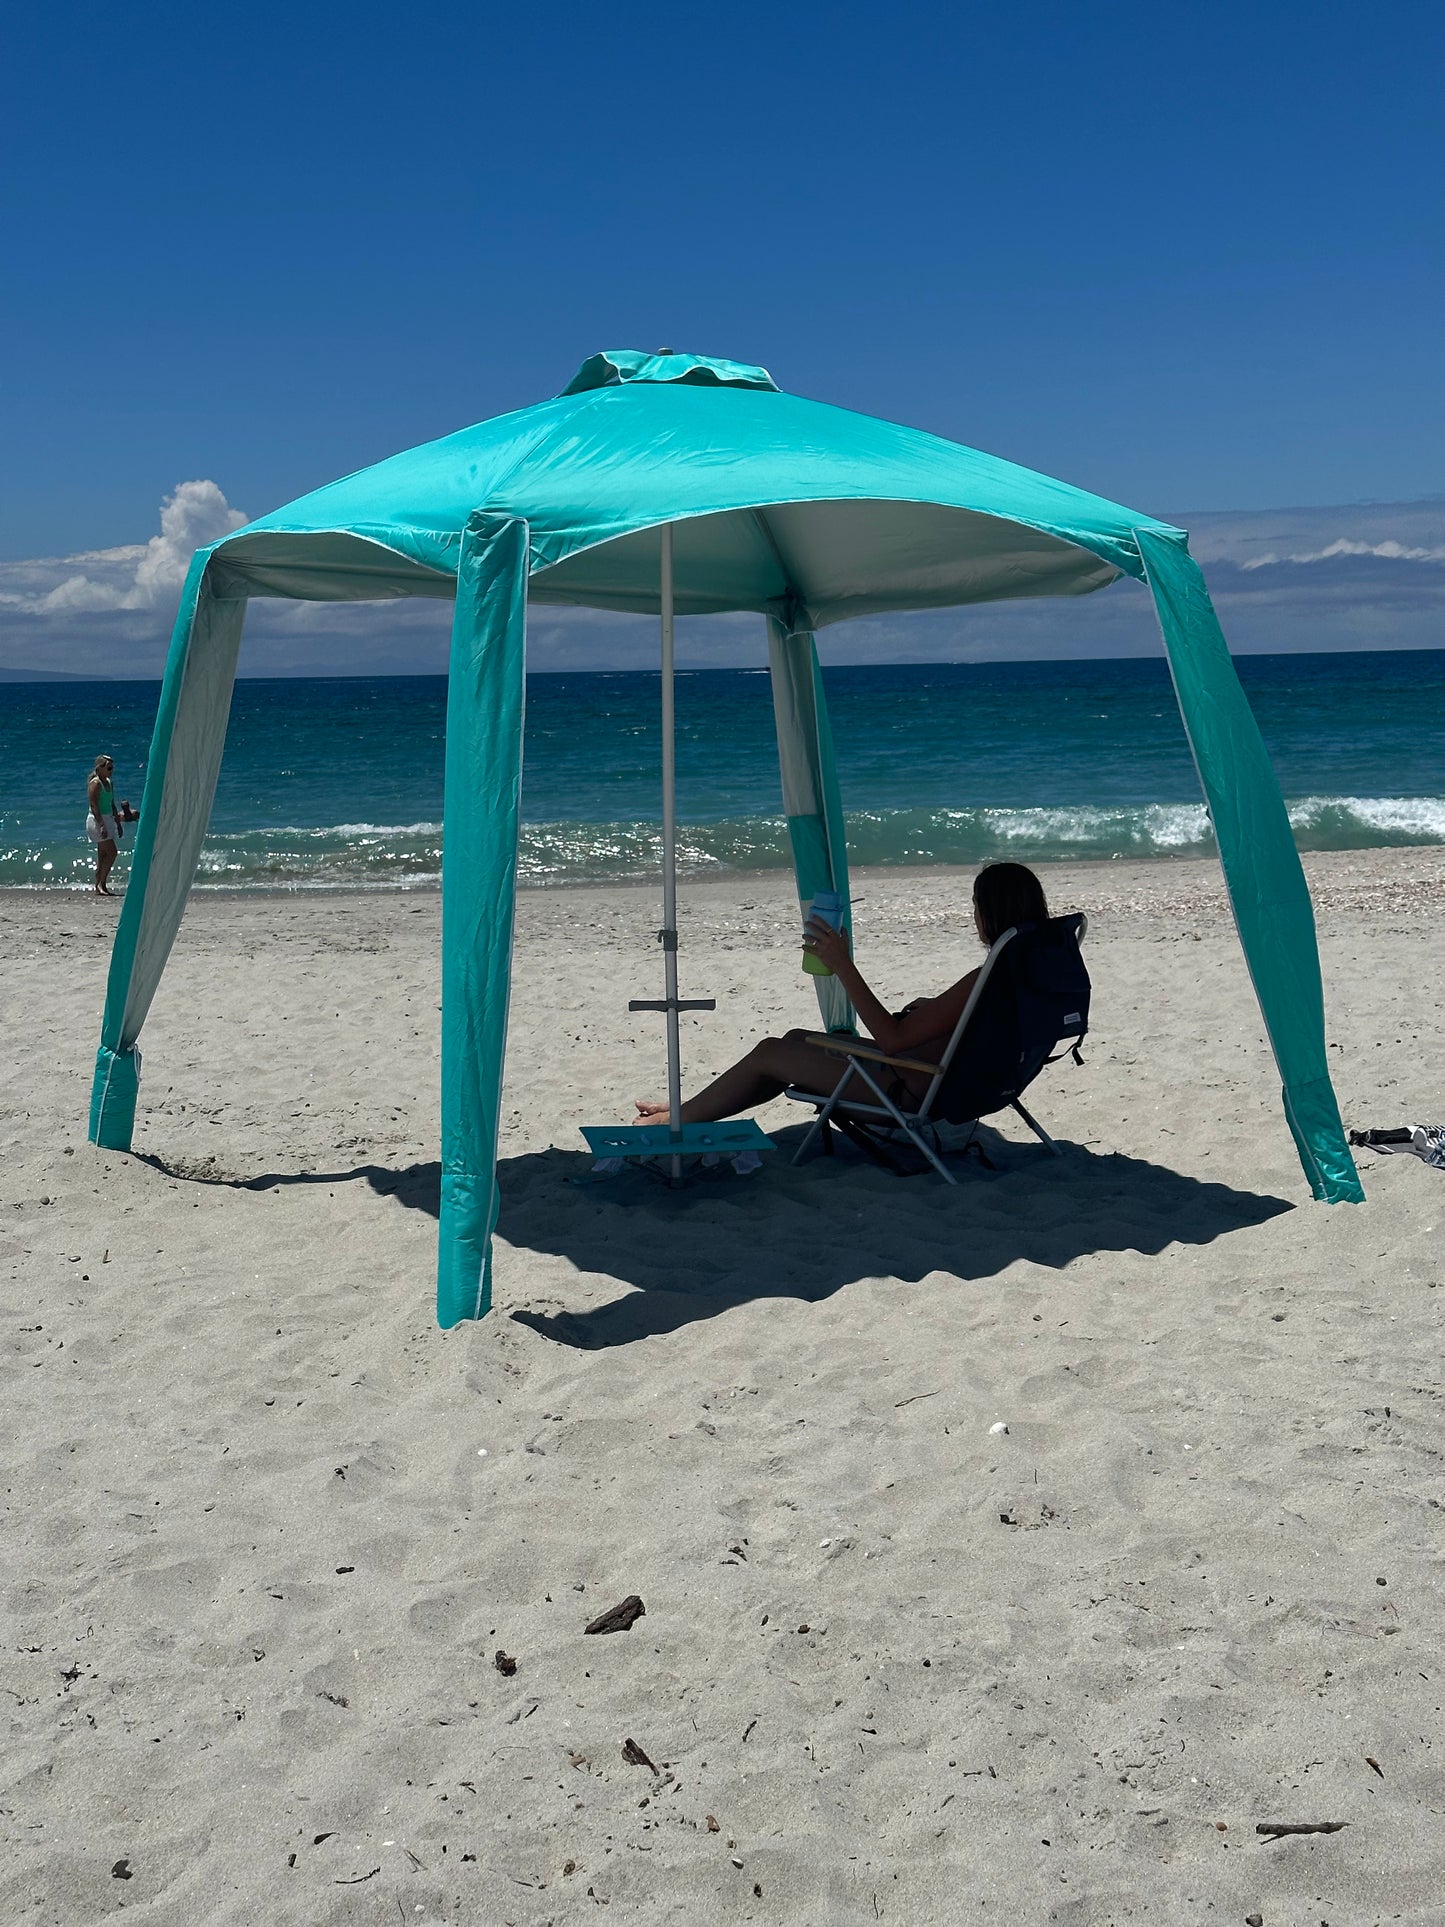 Ultimate Beach Cabana - Turquoise - 3.8m3